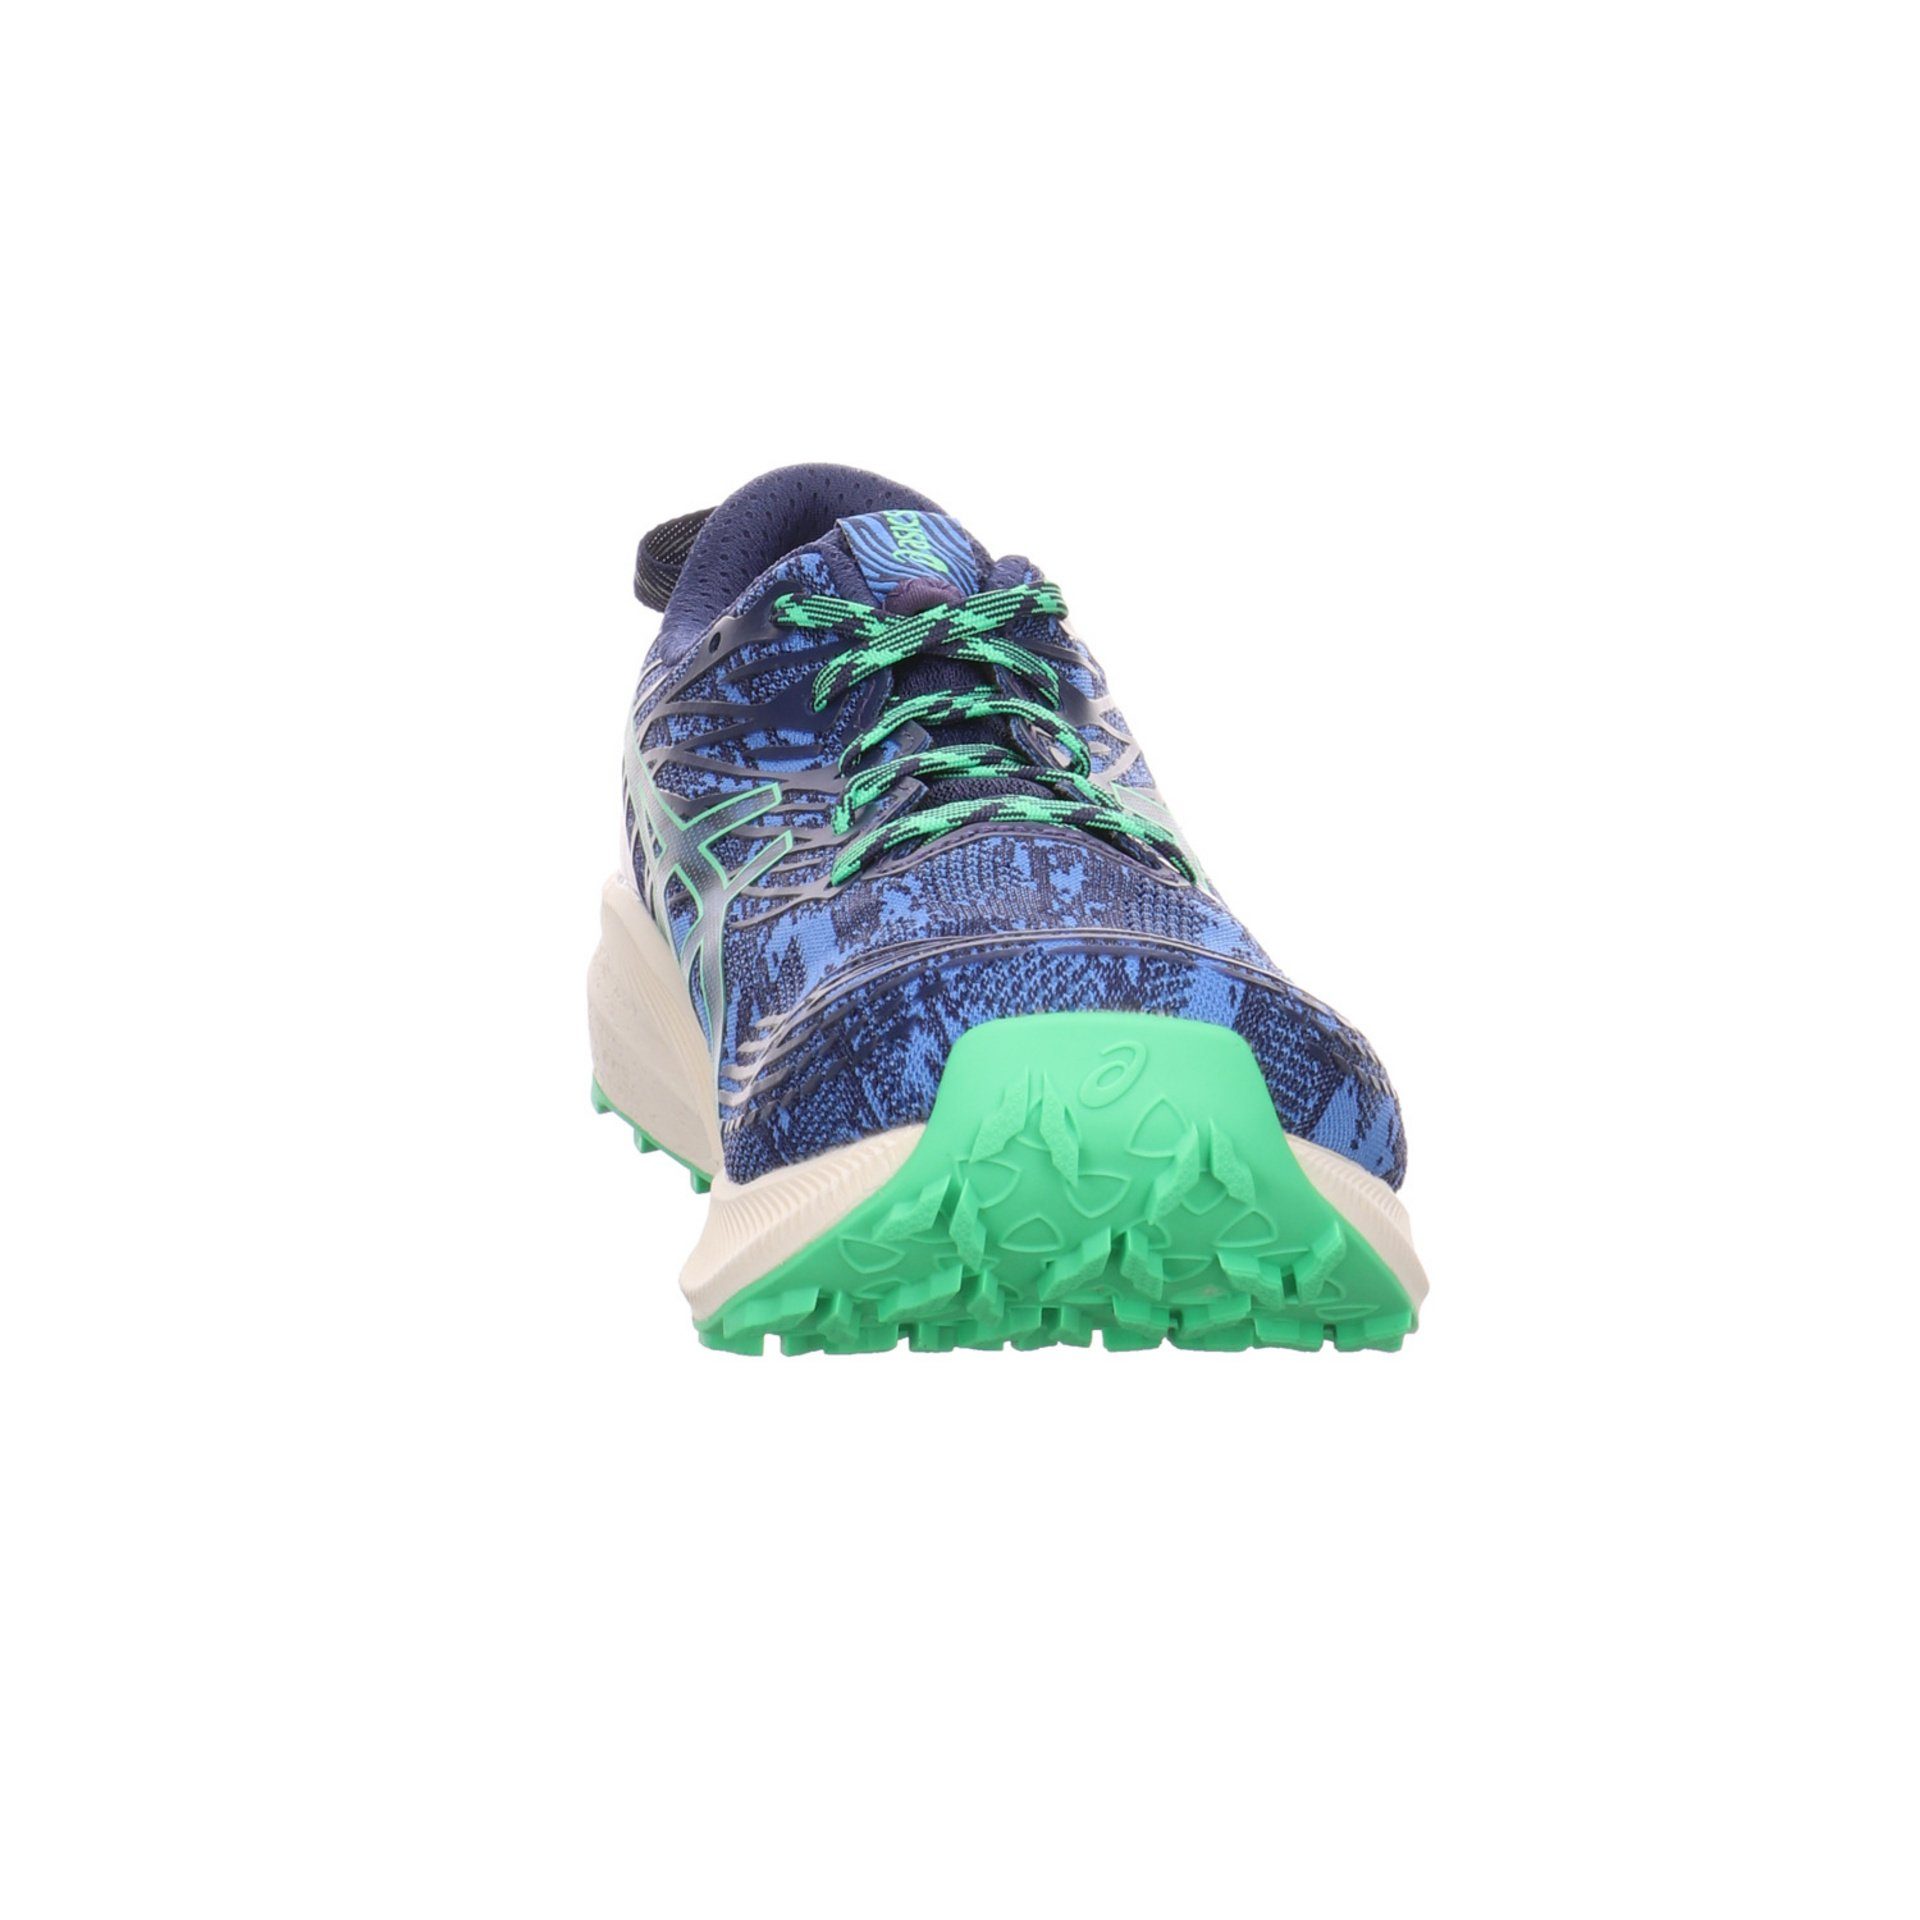 Textil Asics 3 gemustert Fuji Sneaker Trailrunningschuh Textil Lite